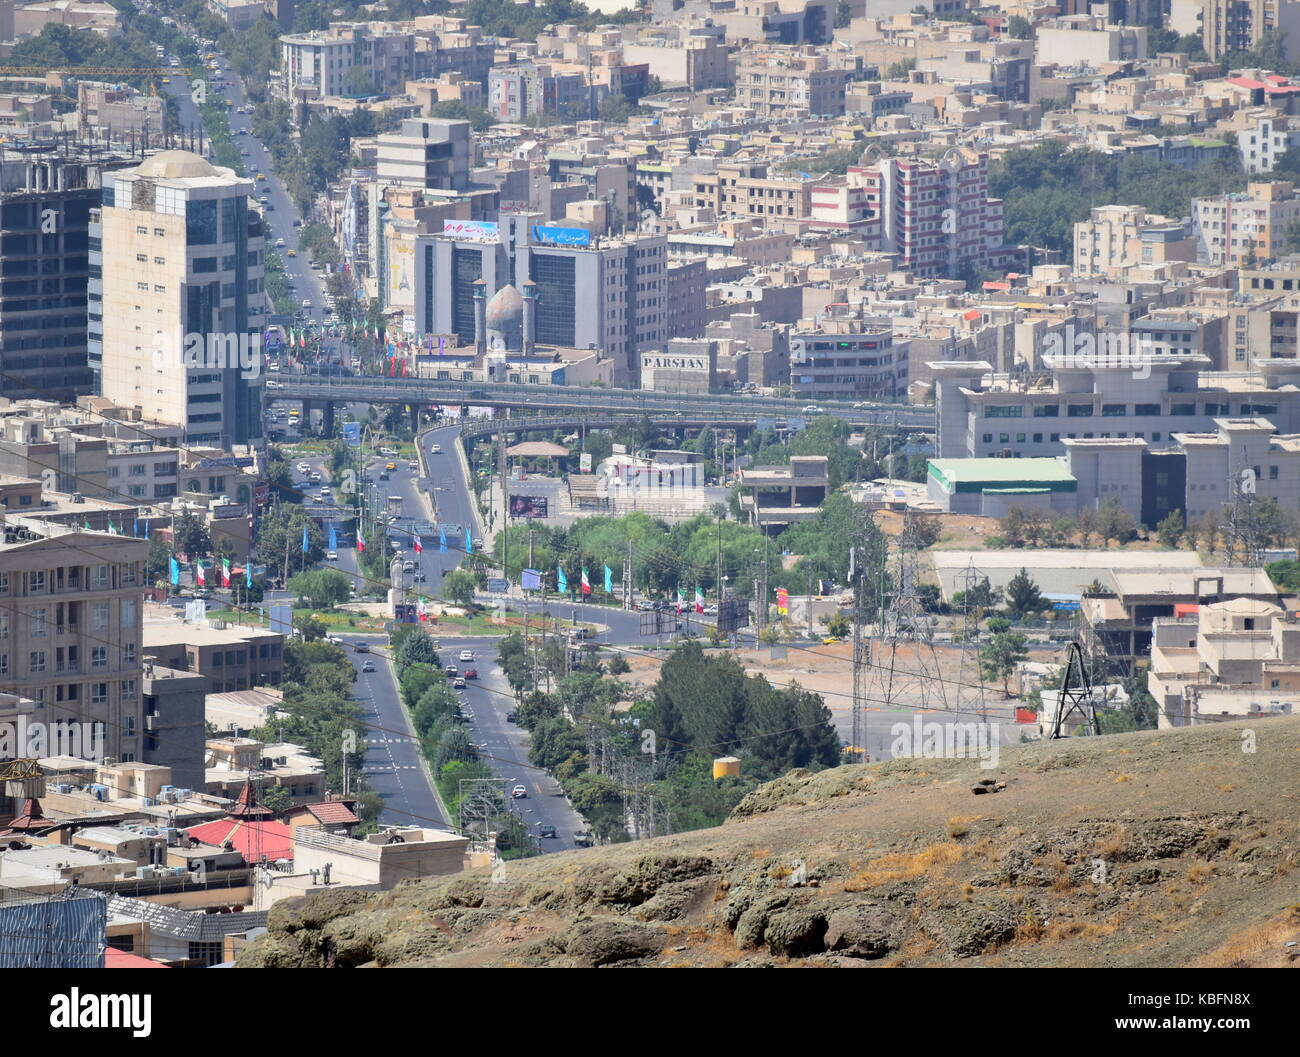 Iran city skyline from the mountains - Urban growth and development in Karaj near Tehran Stock Photo